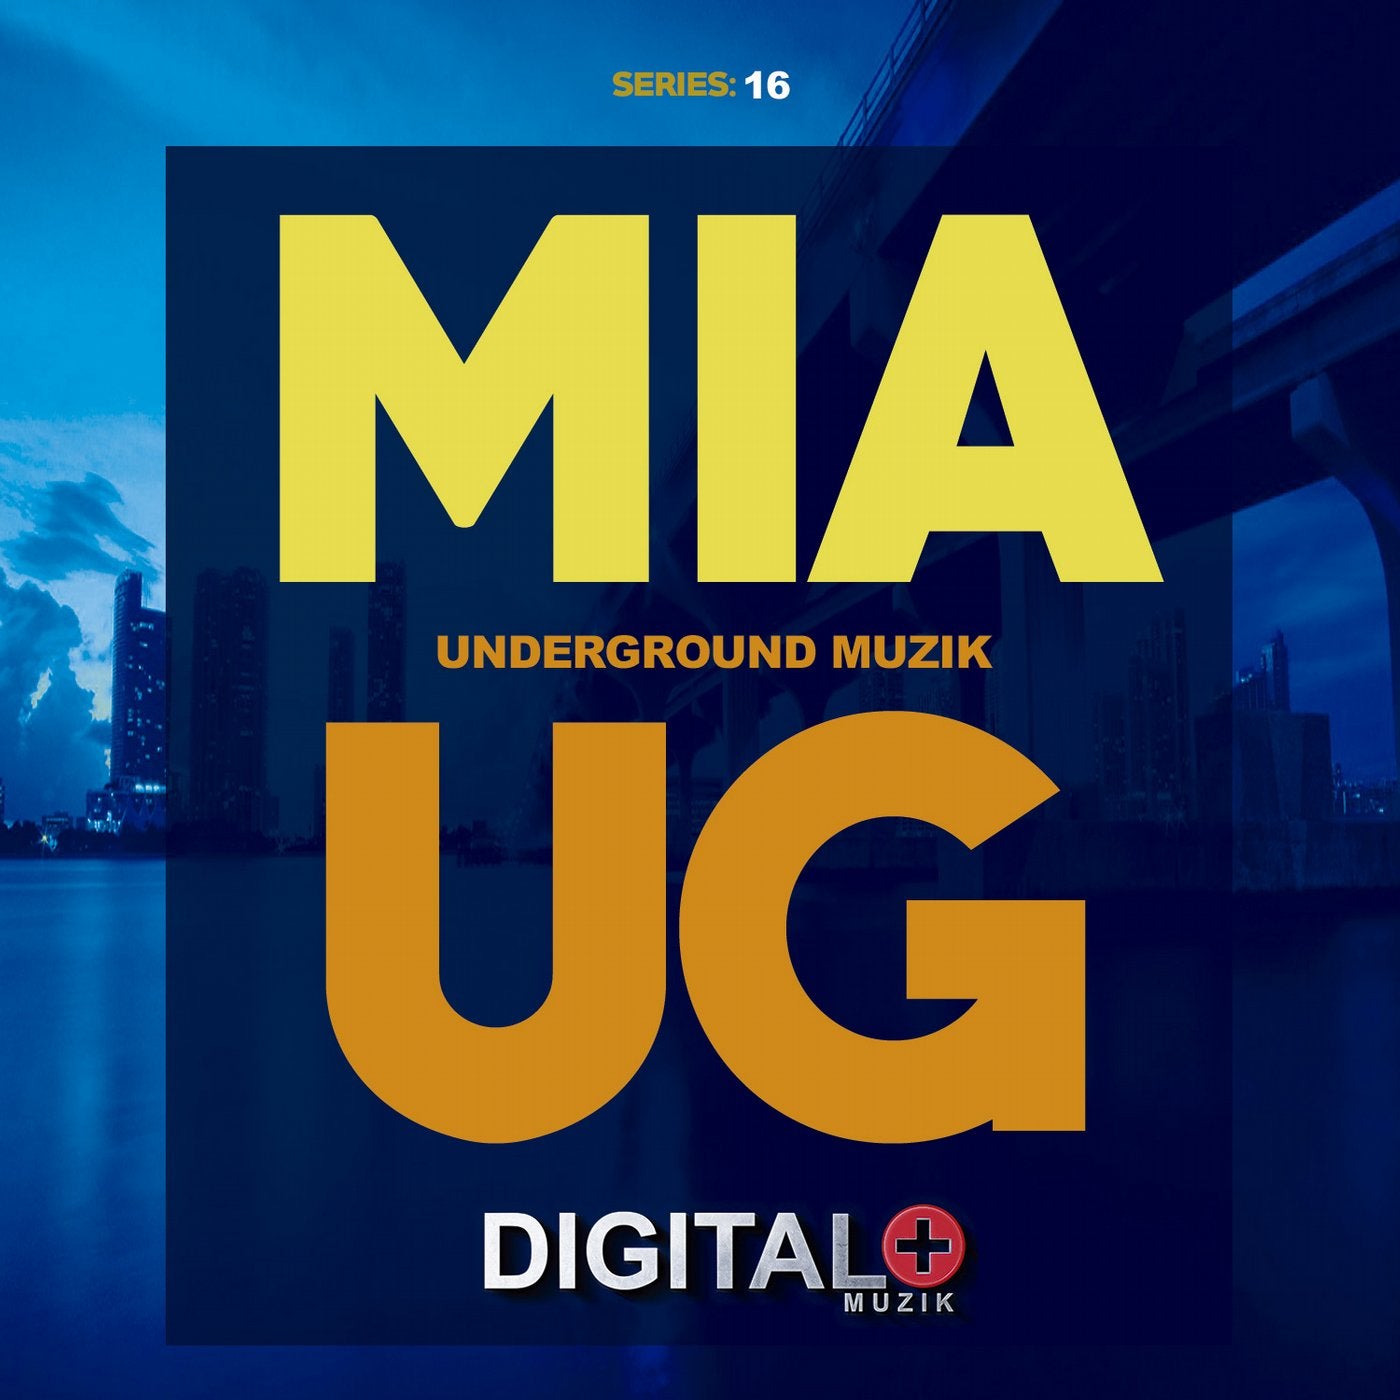 Miami Underground Muzik Series 16